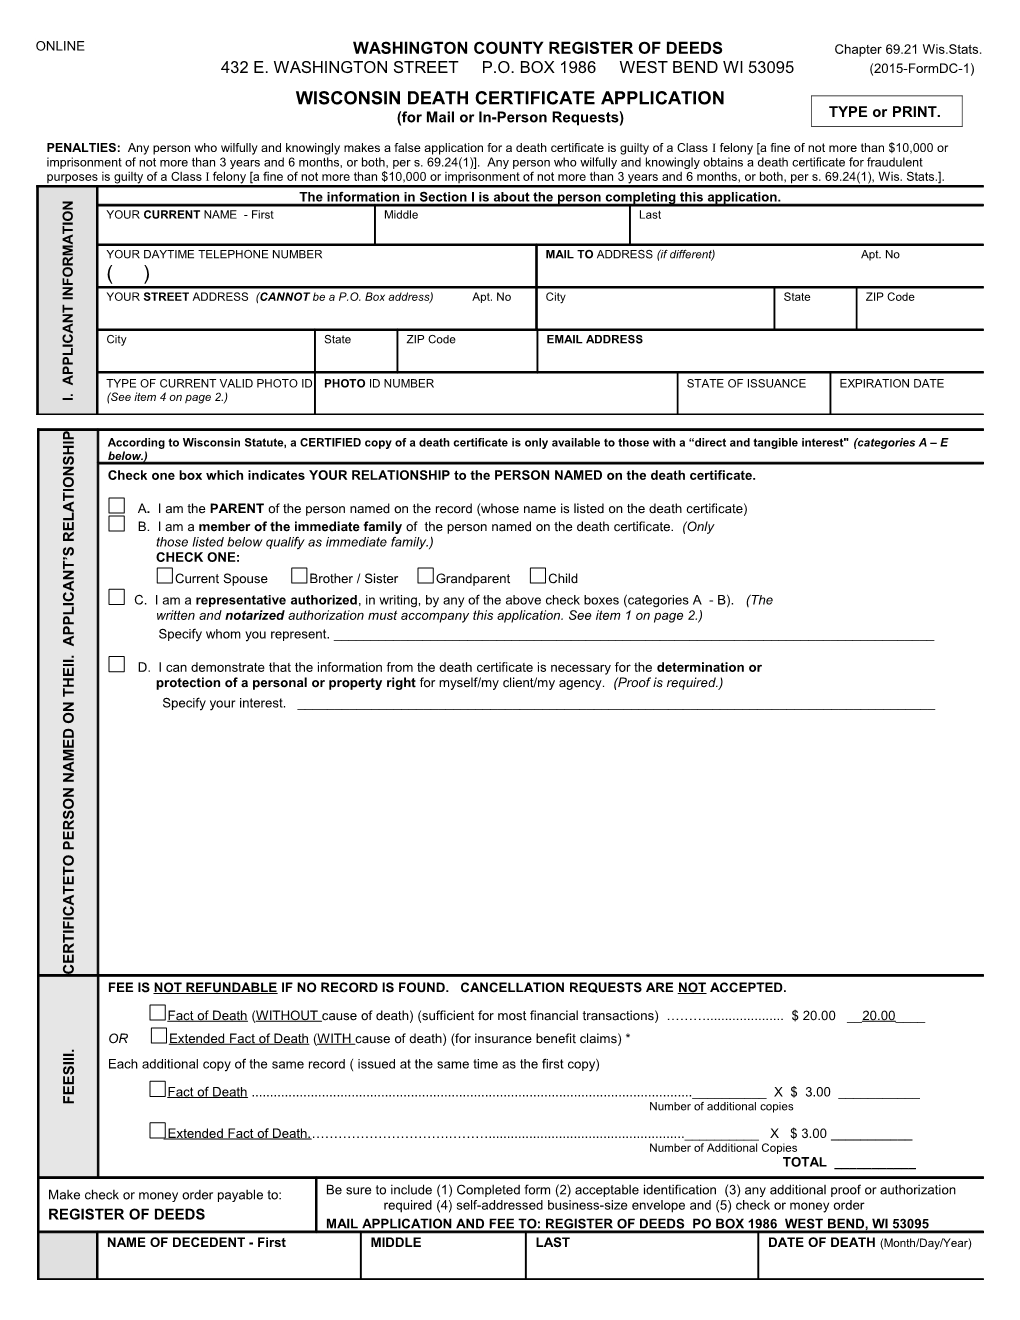 Wisconsin Birth Certificate Application